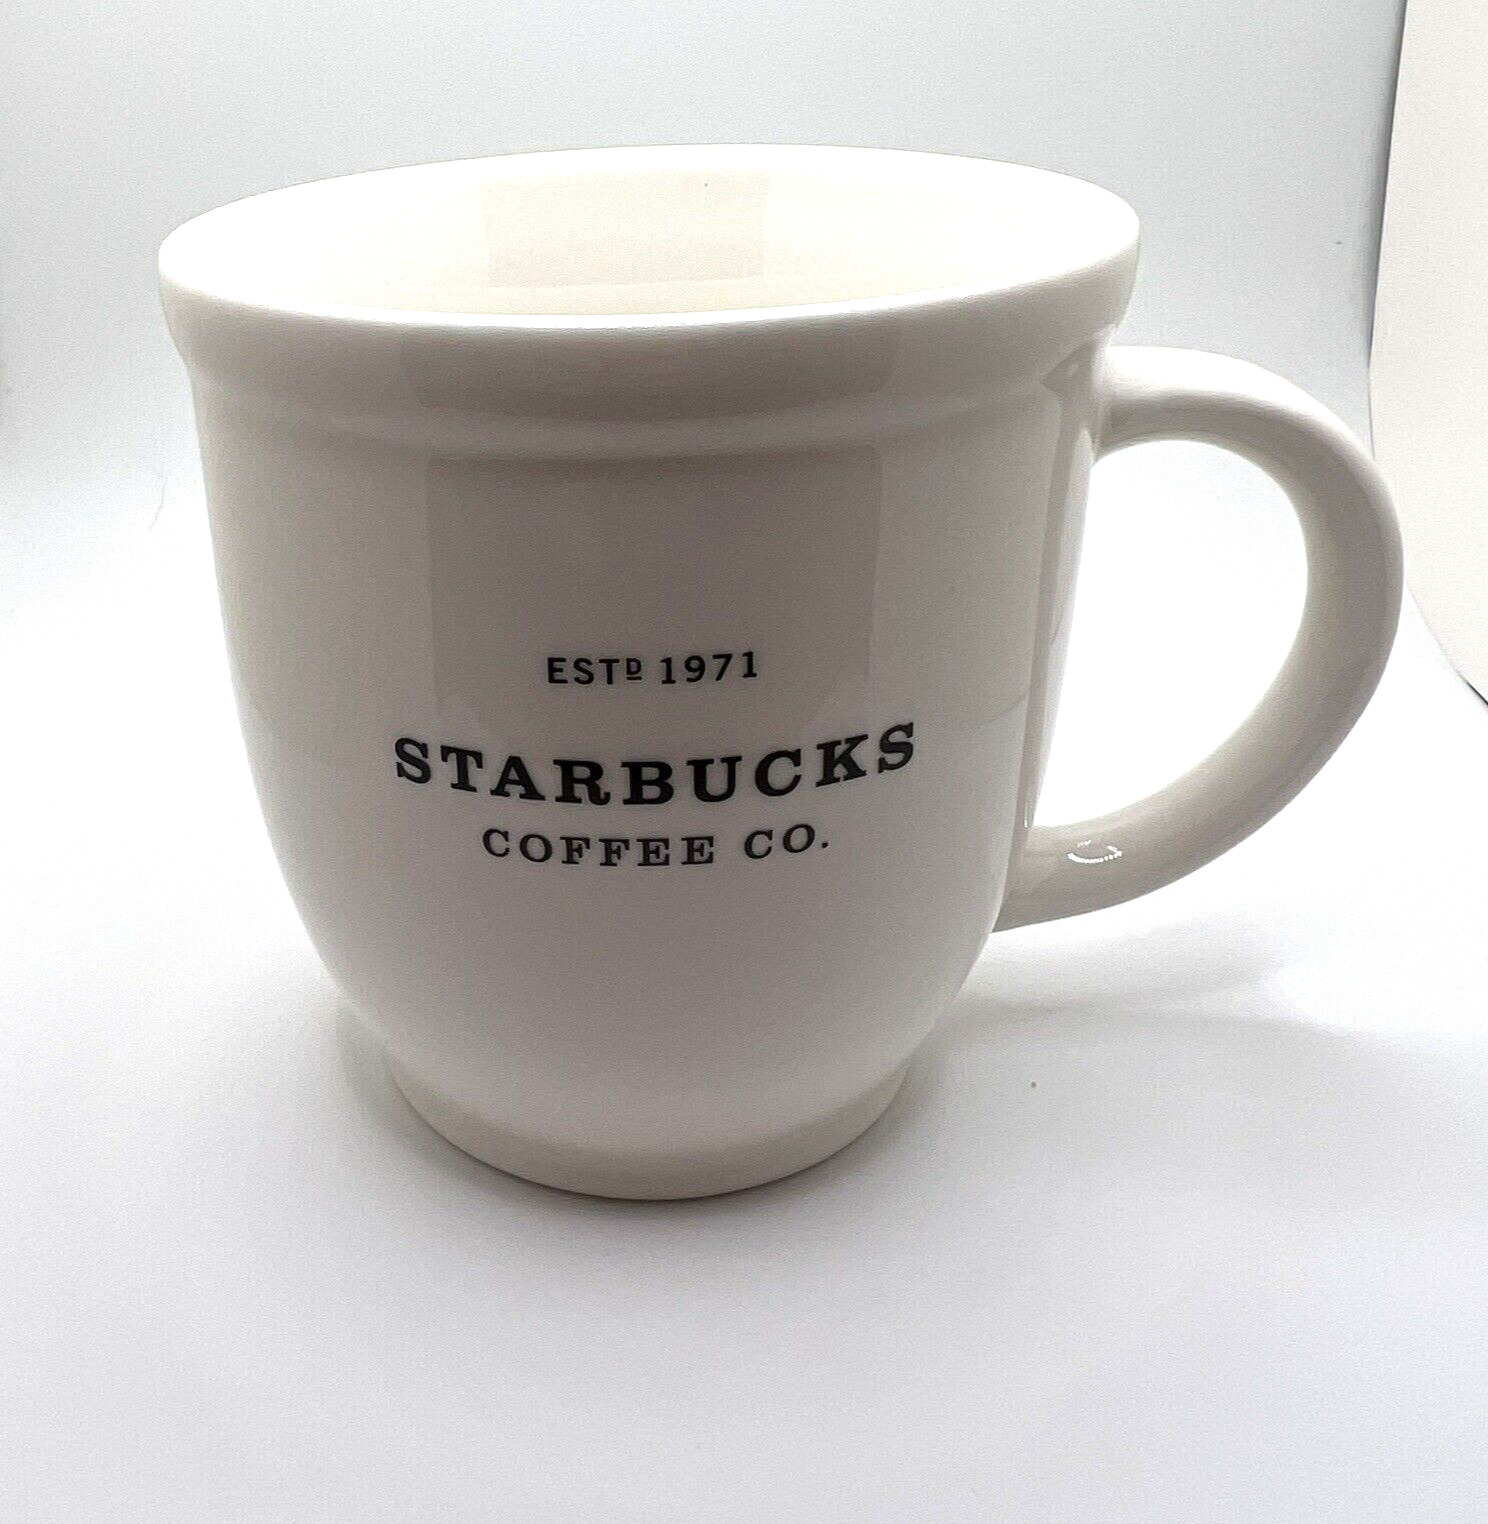 2007 Starbucks Coffee Co Estd. 1971 Barista White Ceramic Mug - EUC - 18 ounce